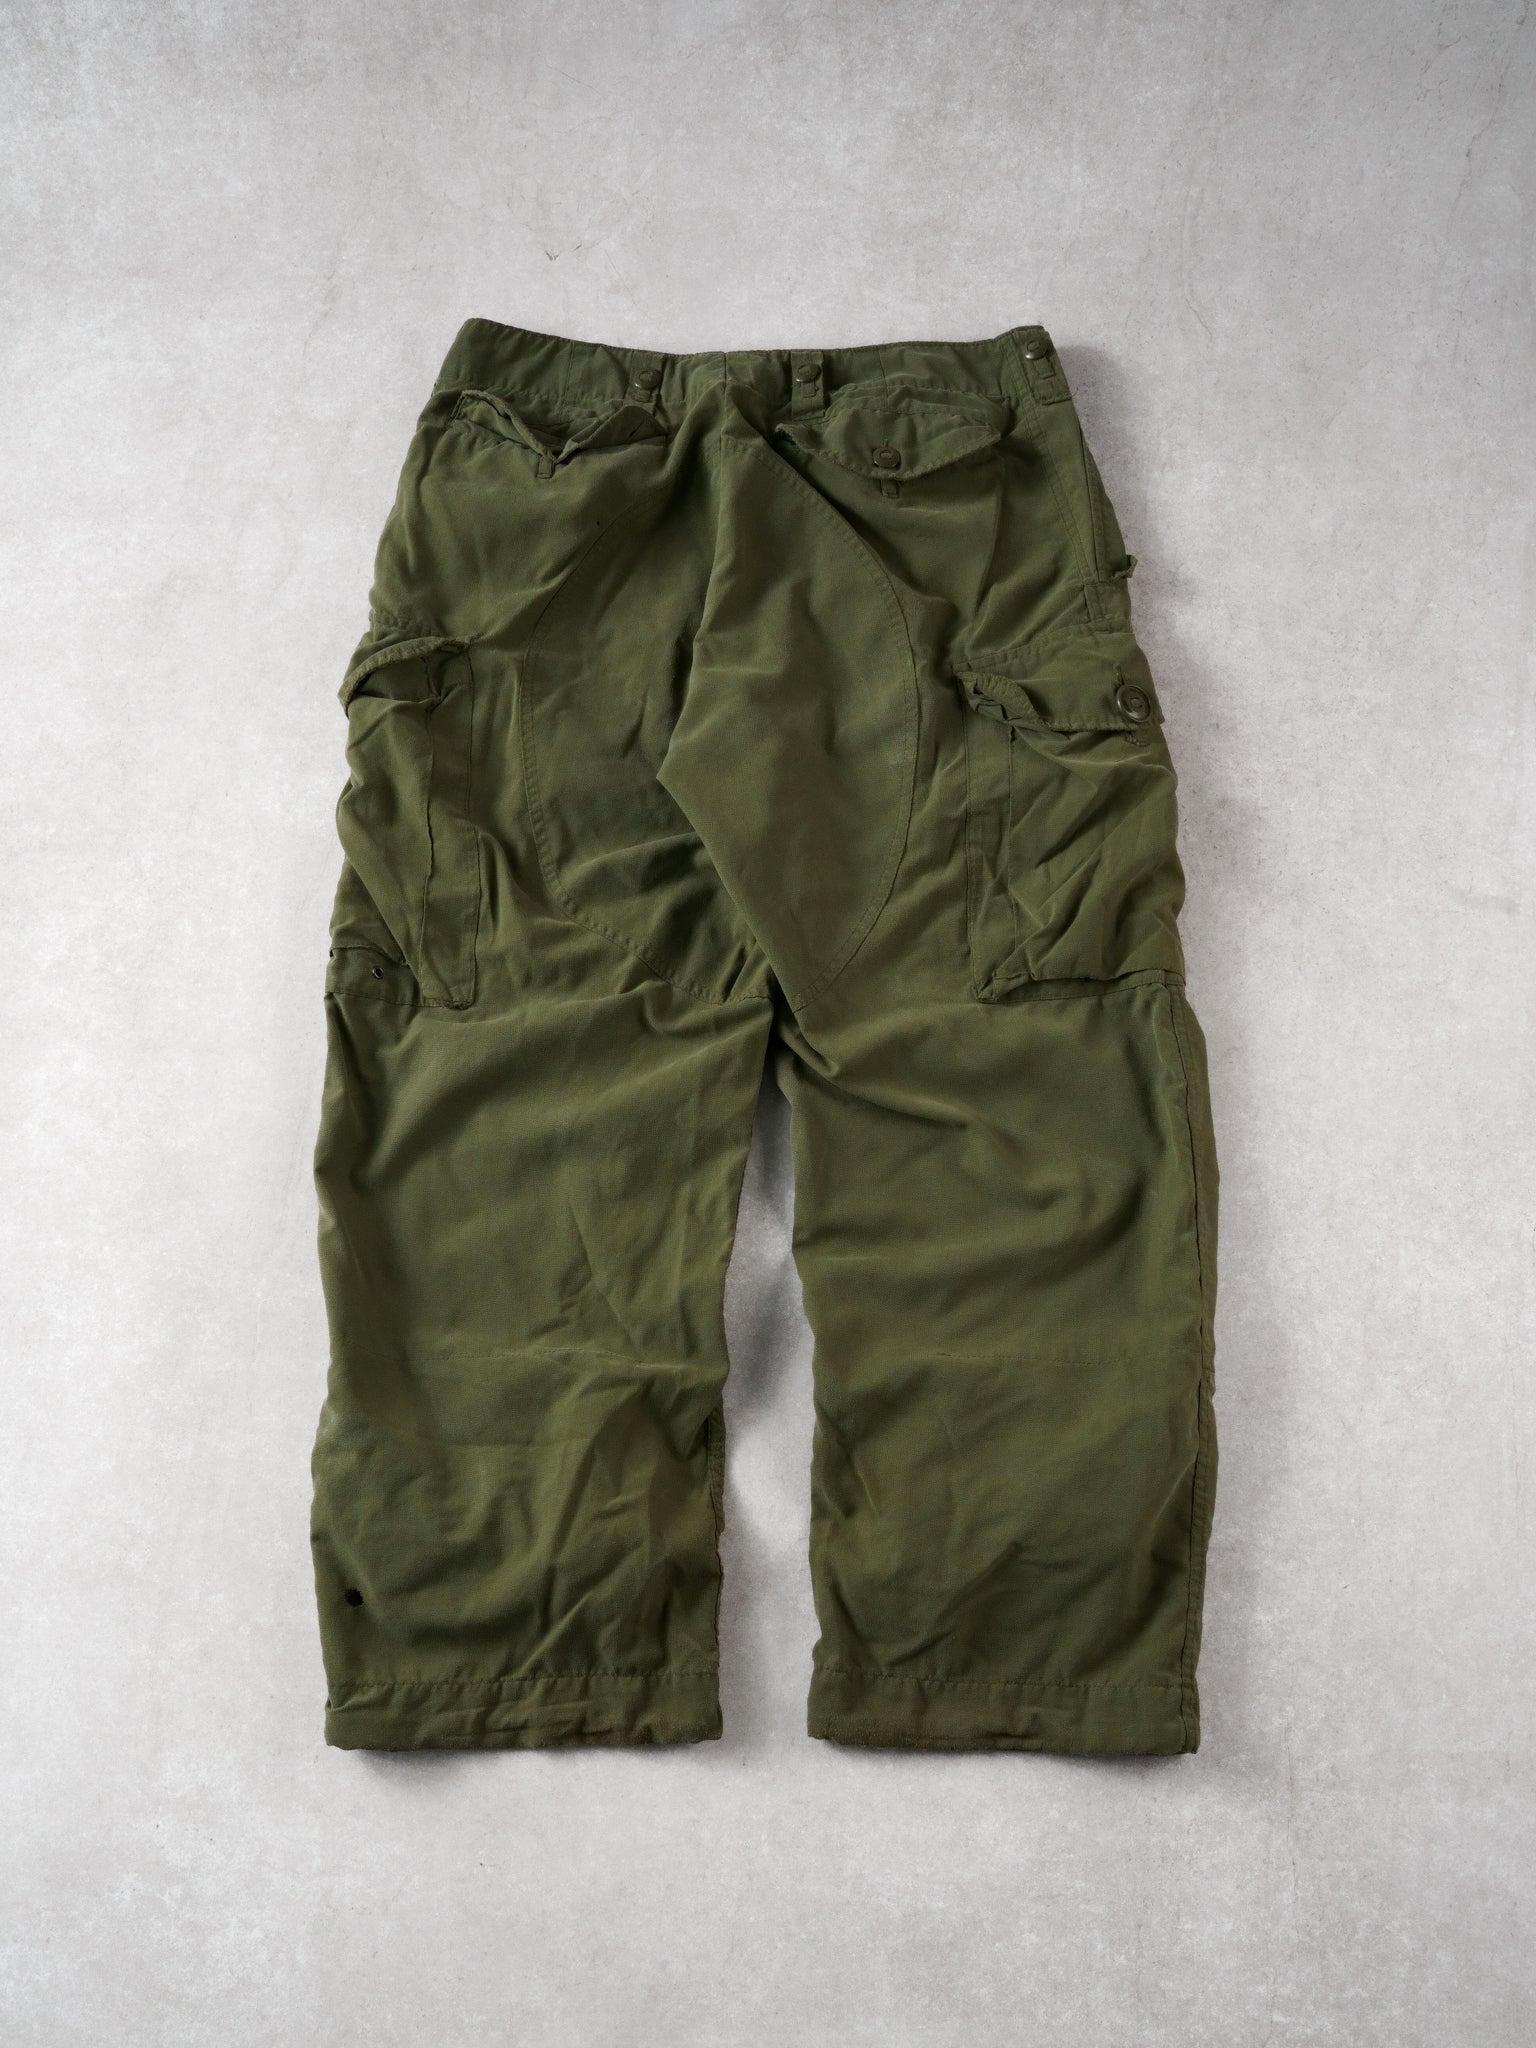 Vintage 90s Army Green Parachute Pants (34x28)